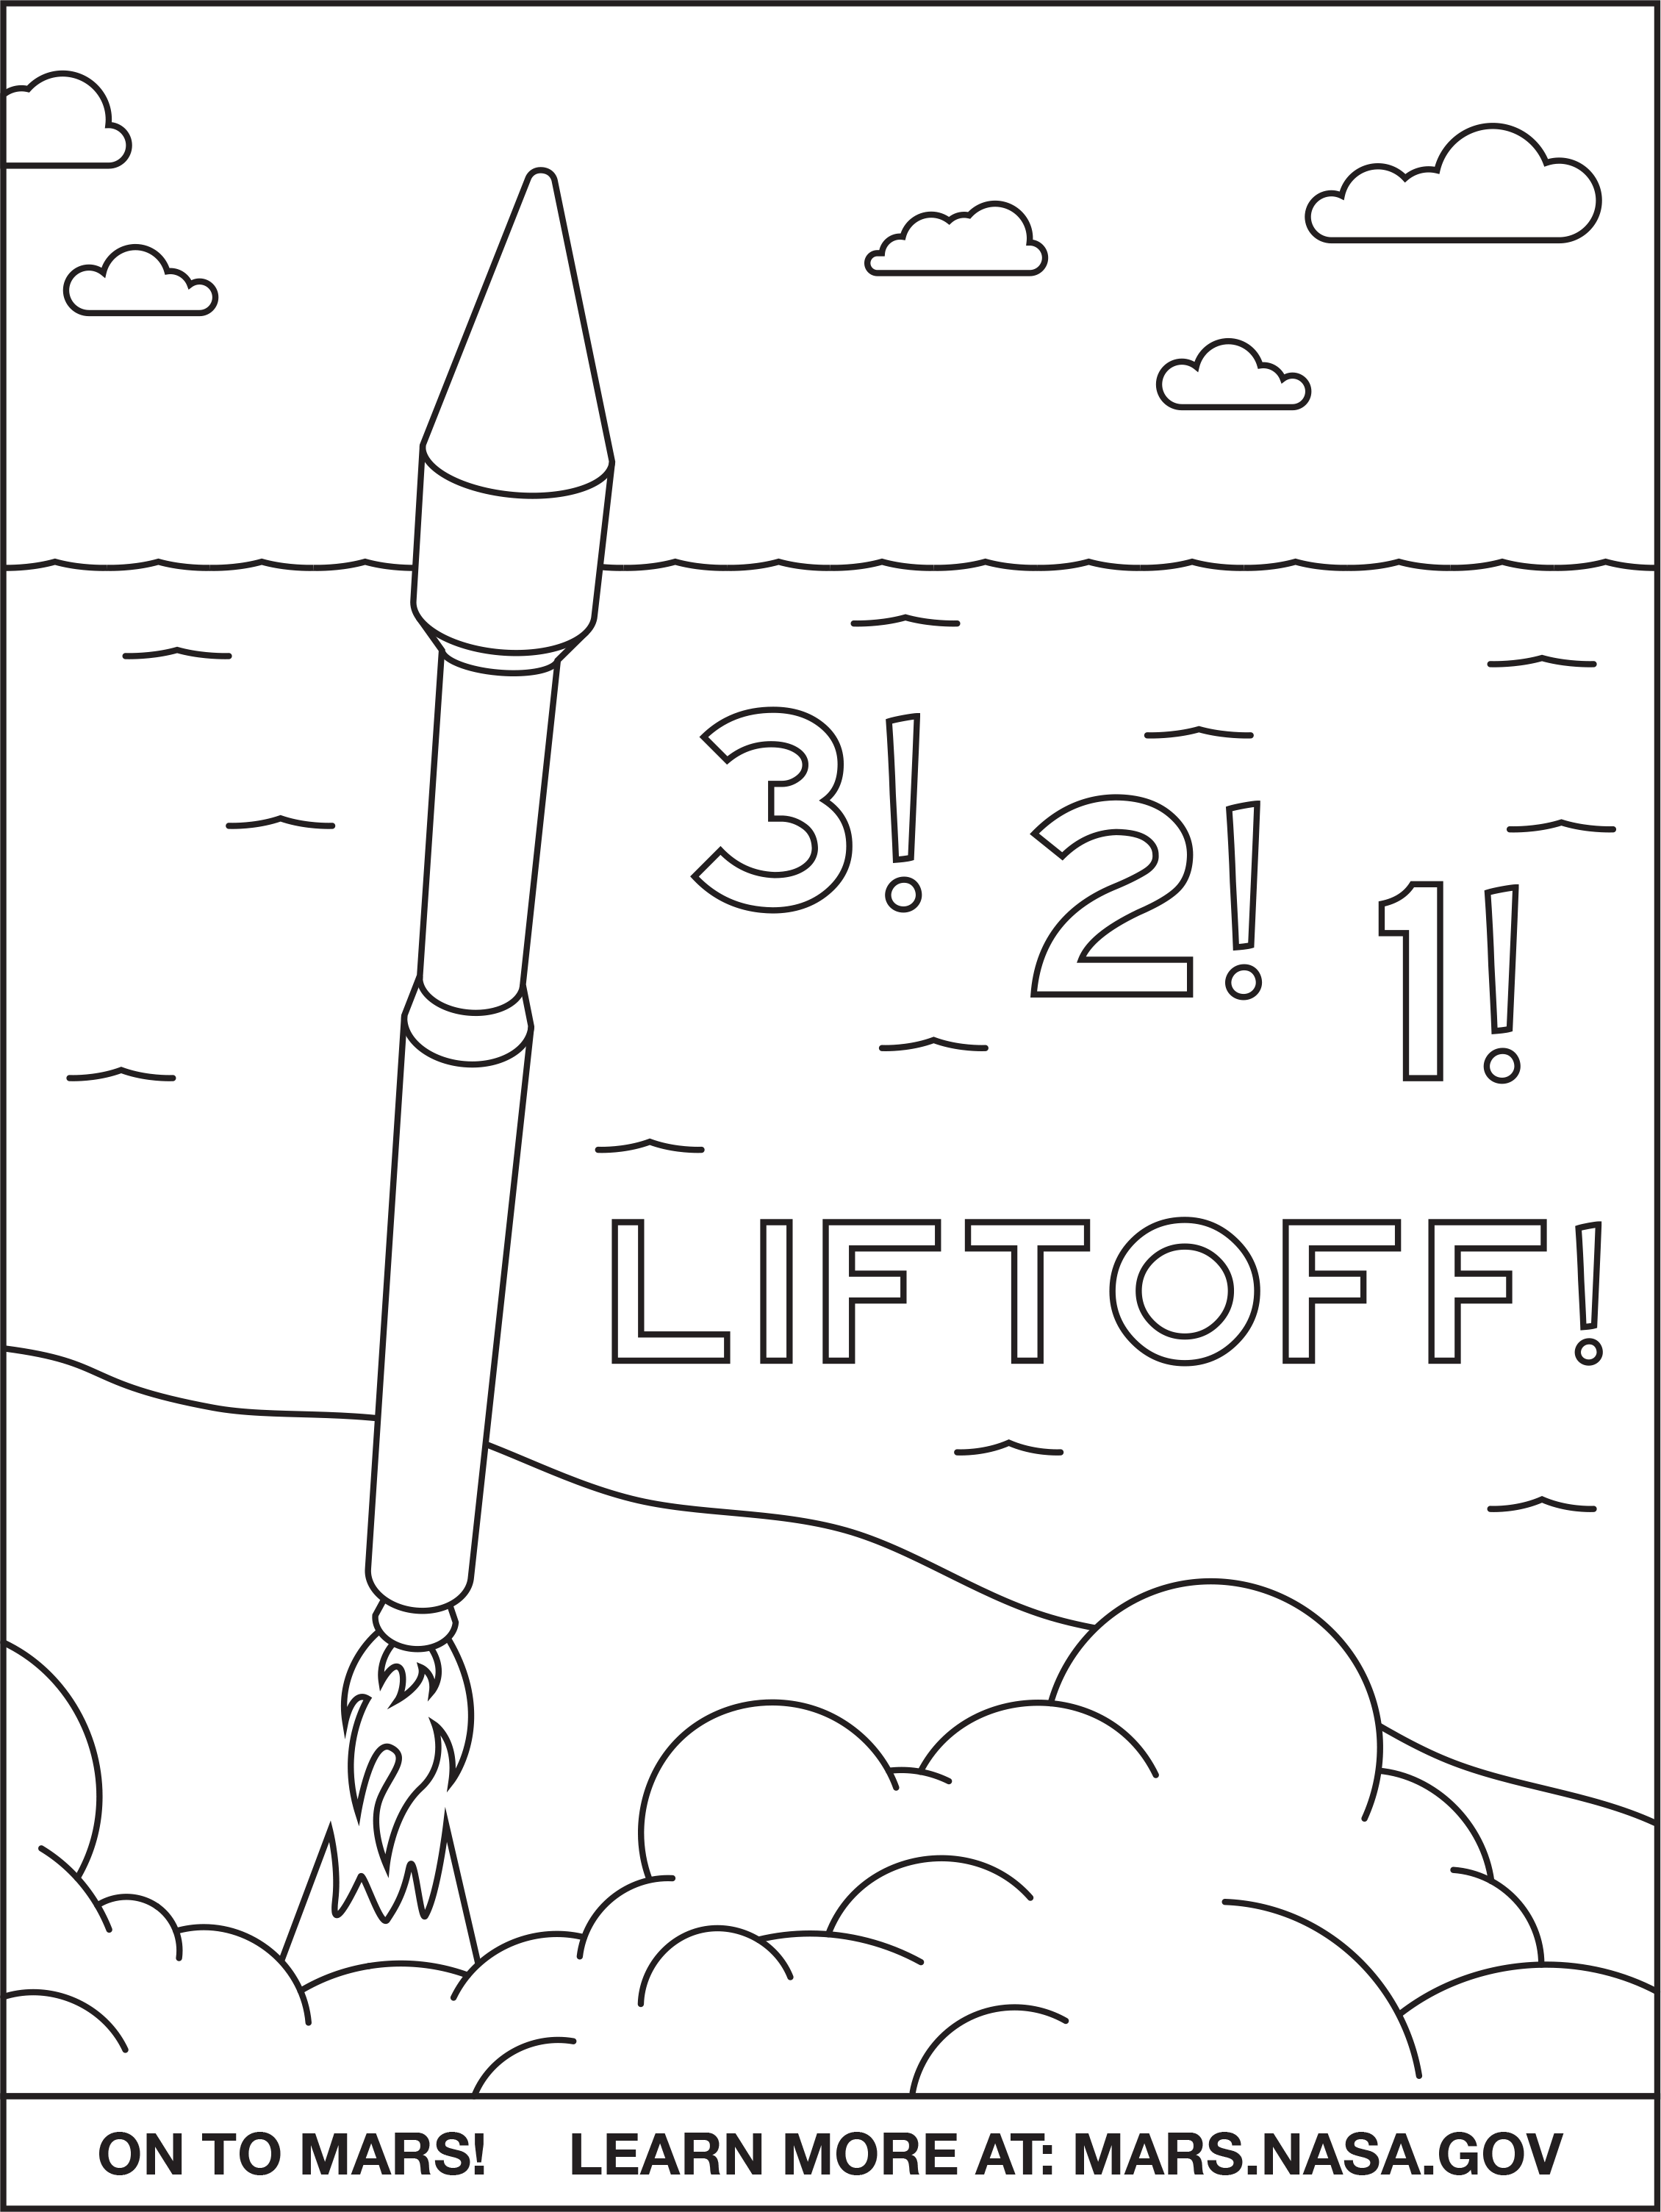 Coloring sheet of the Atlas rocket